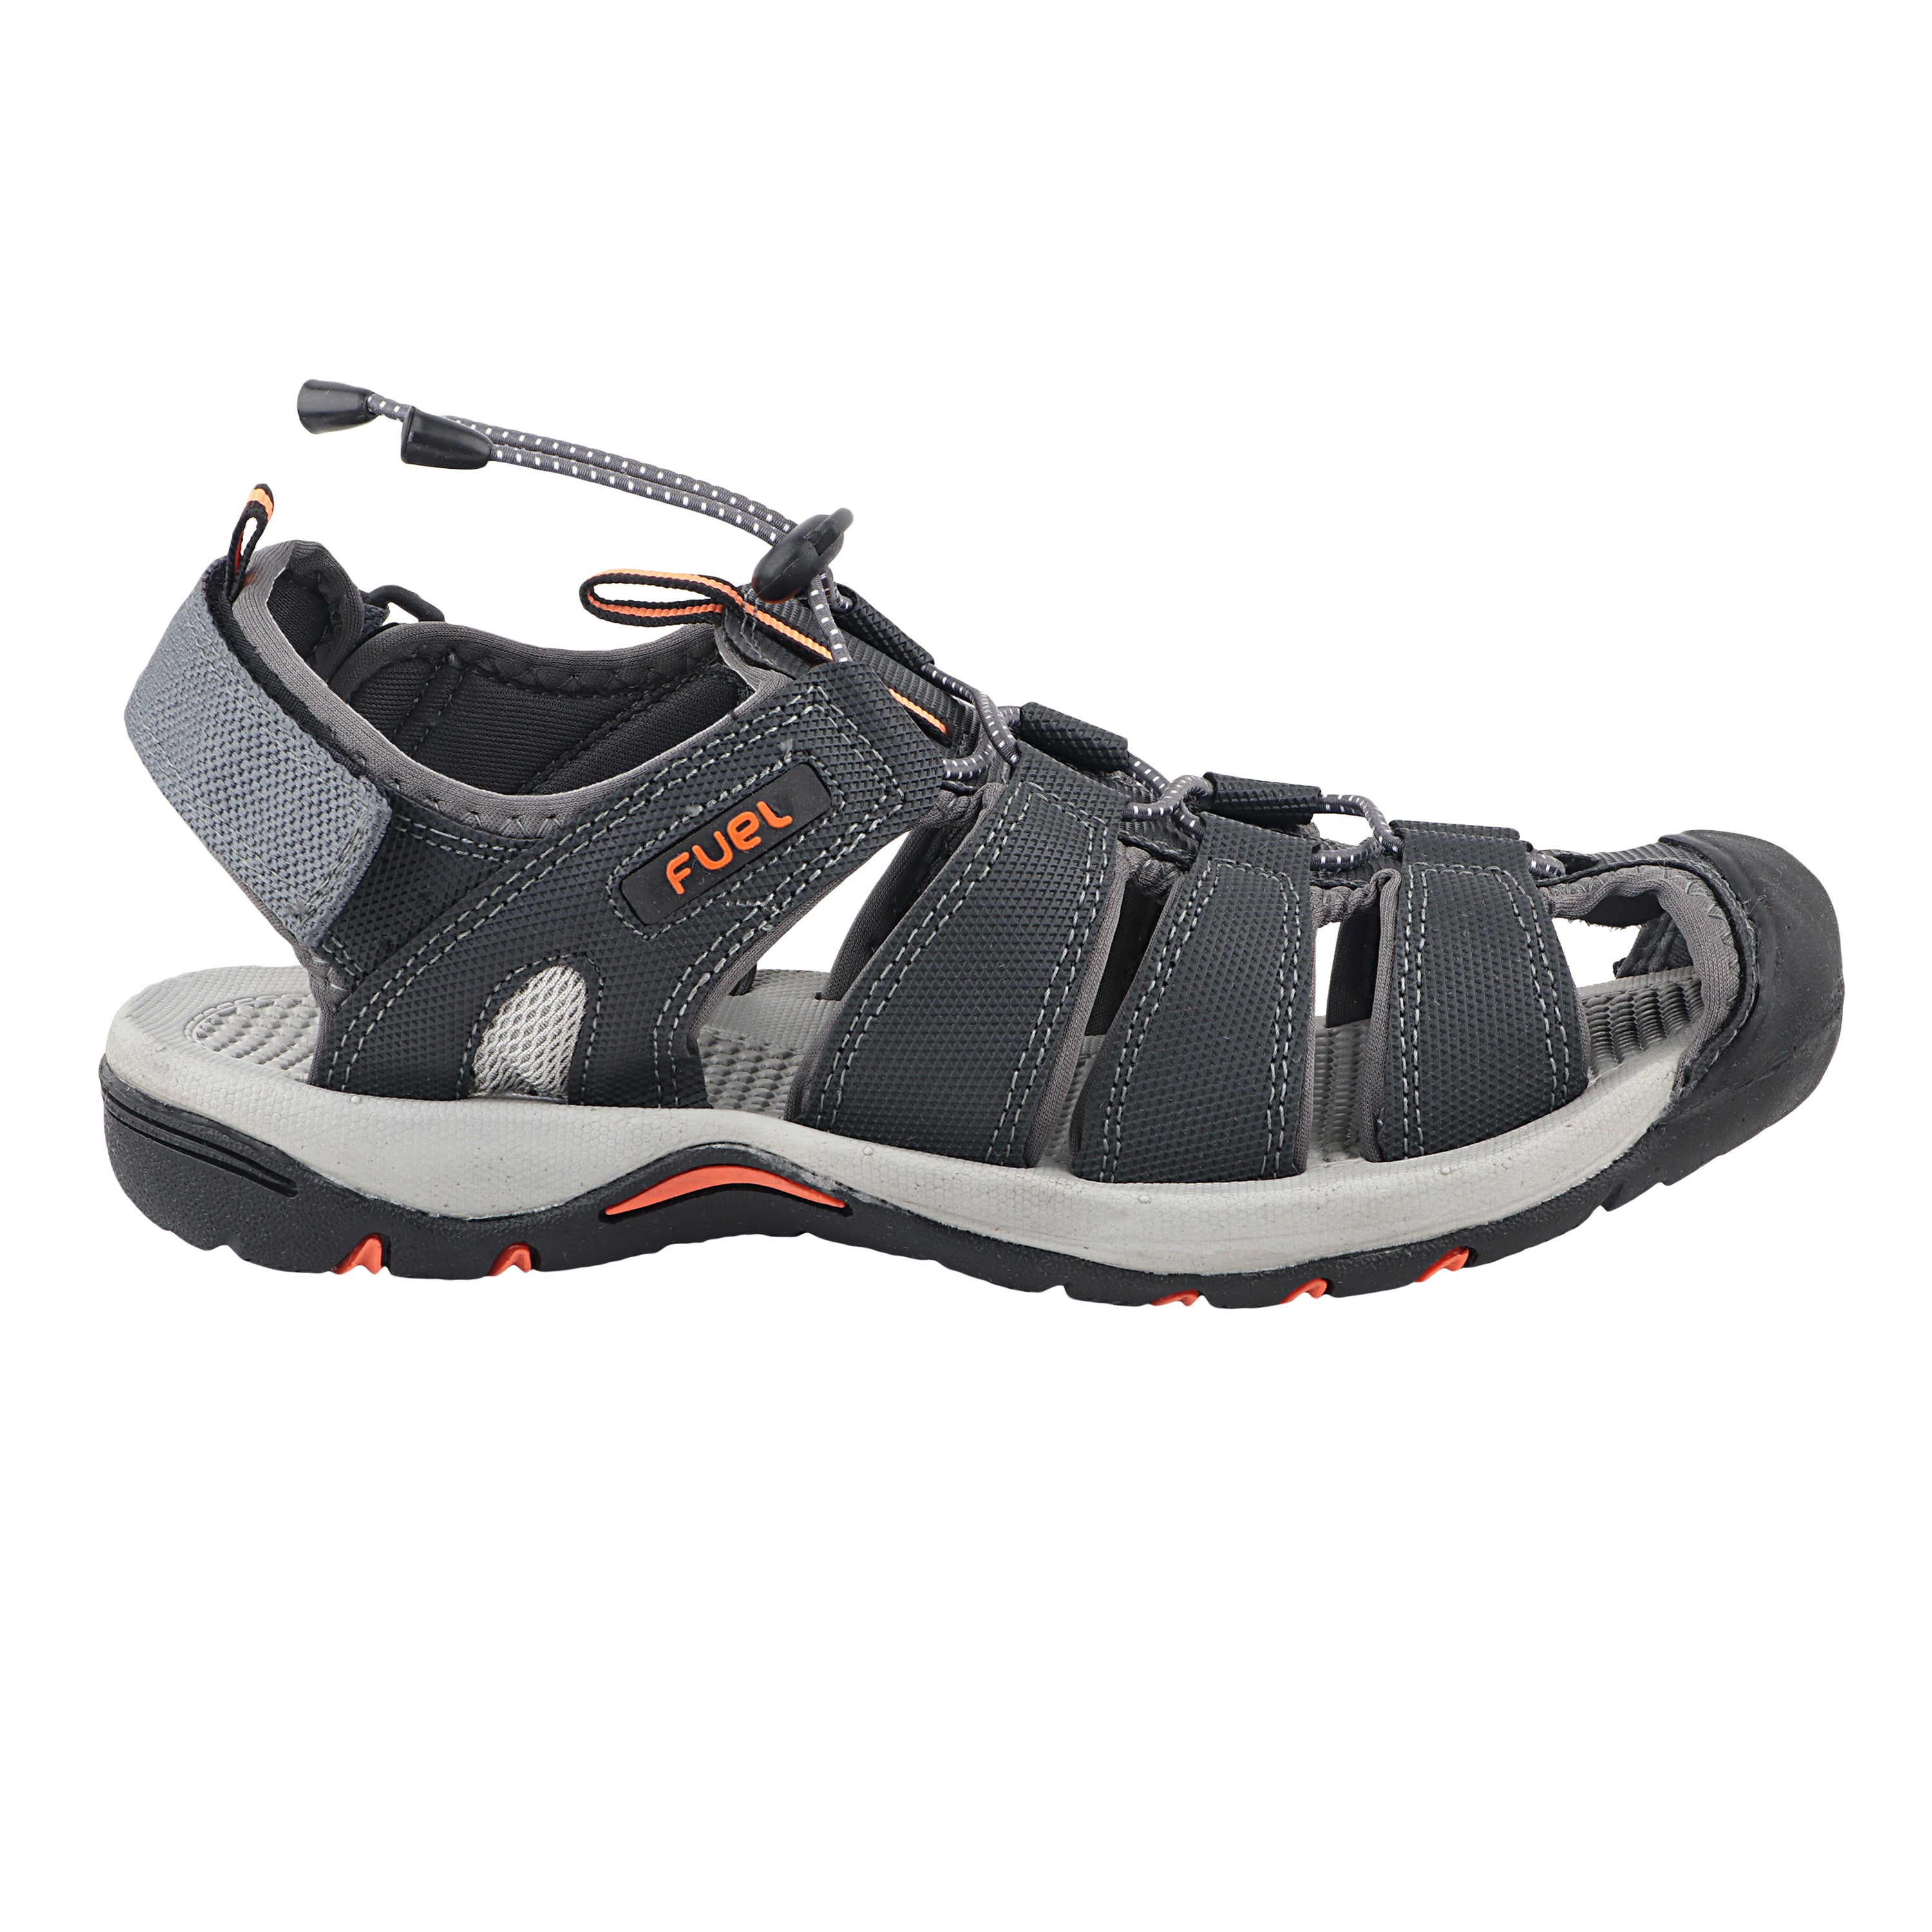 Fuel Soldier-08 Fisherman Sandals for Men (Grey-Orange)